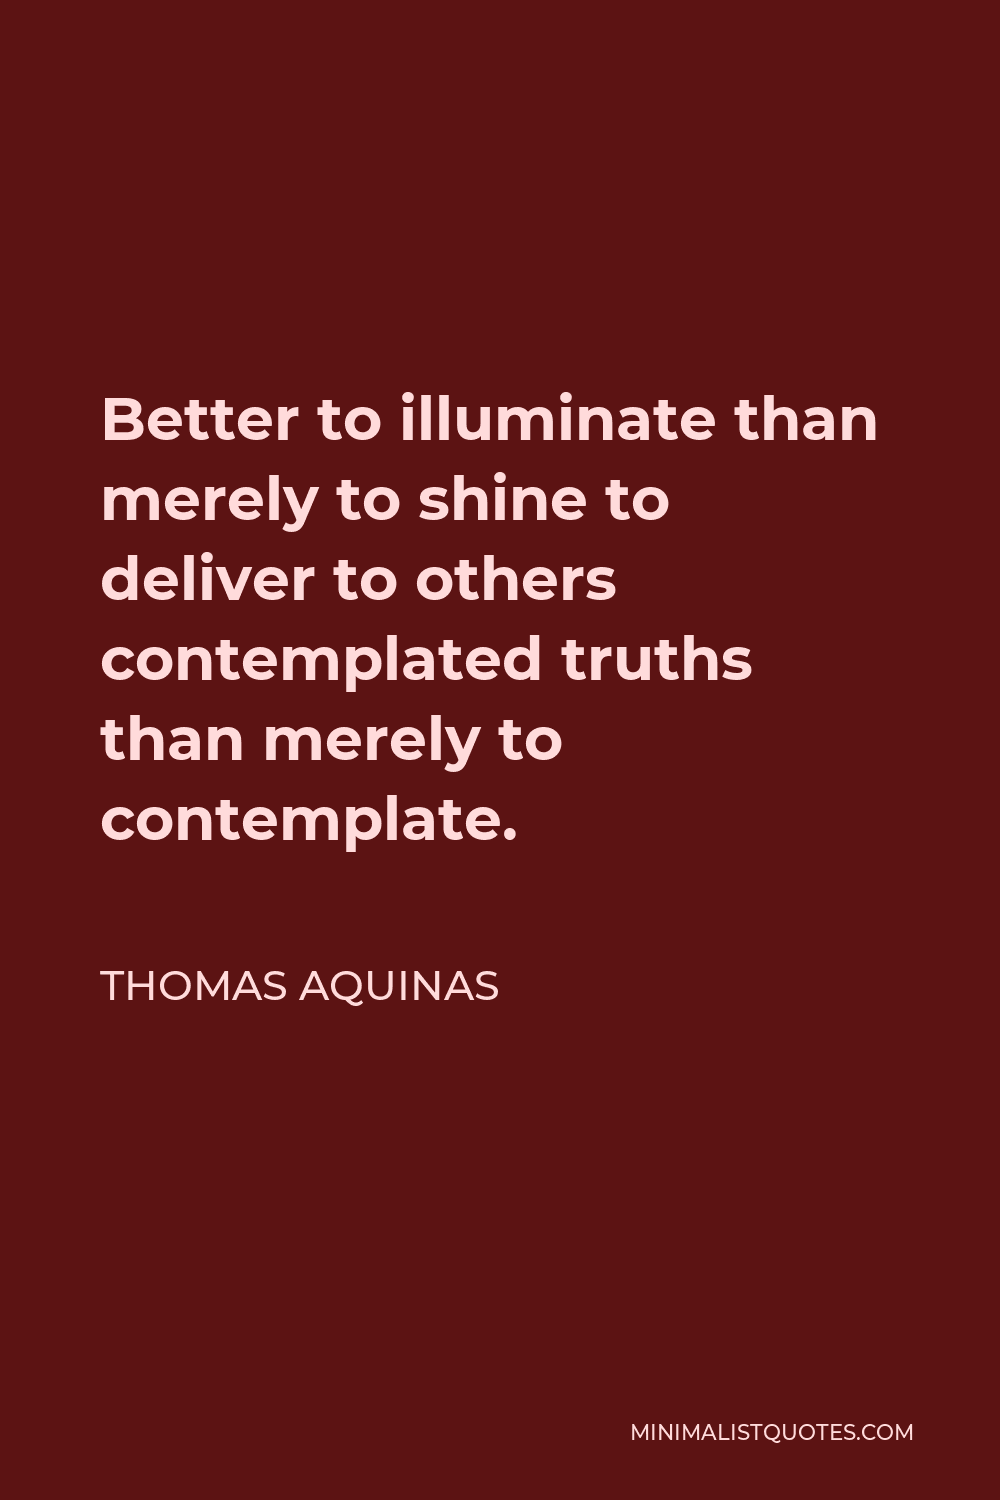 Thomas Aquinas Quote: “Better to illuminate, than merely to shine.”